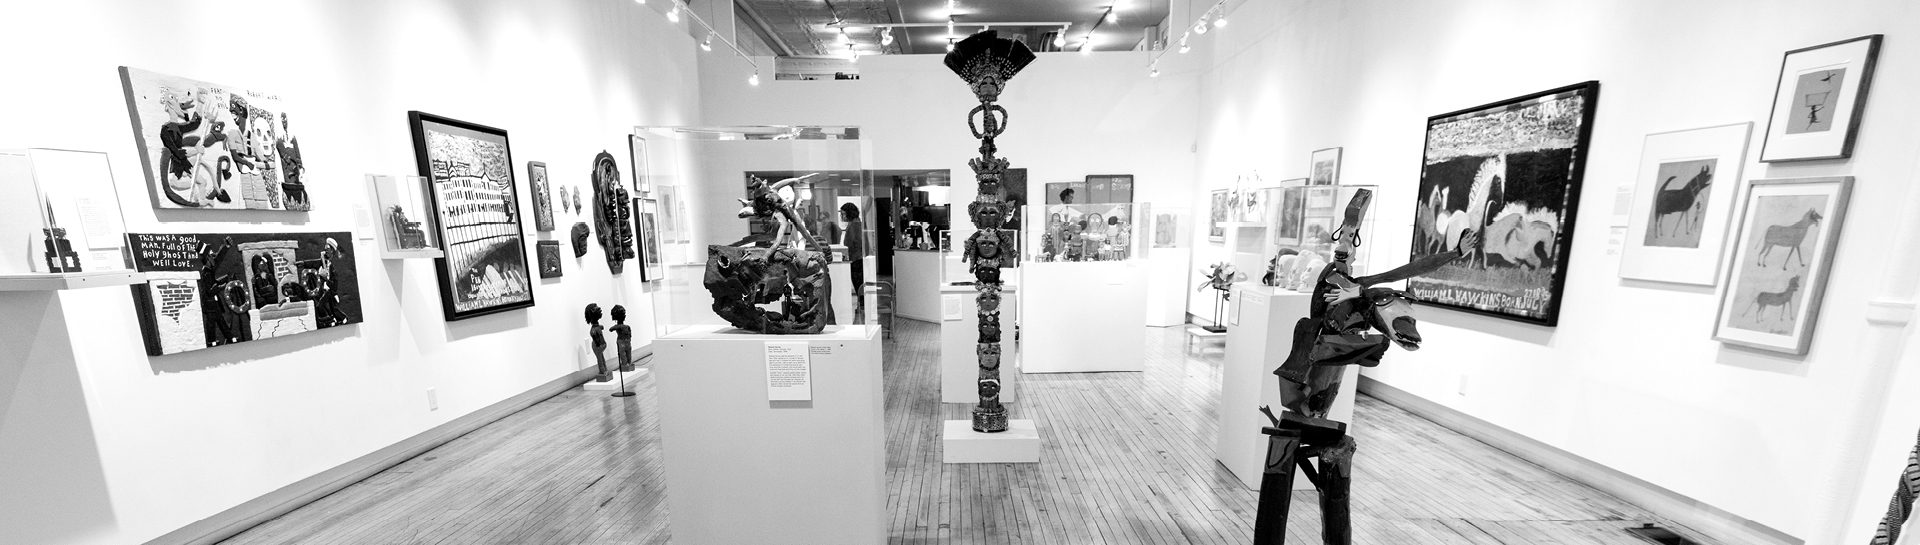 Intuit exhibition, Post Black Folk Art in America 1930-1980-2016